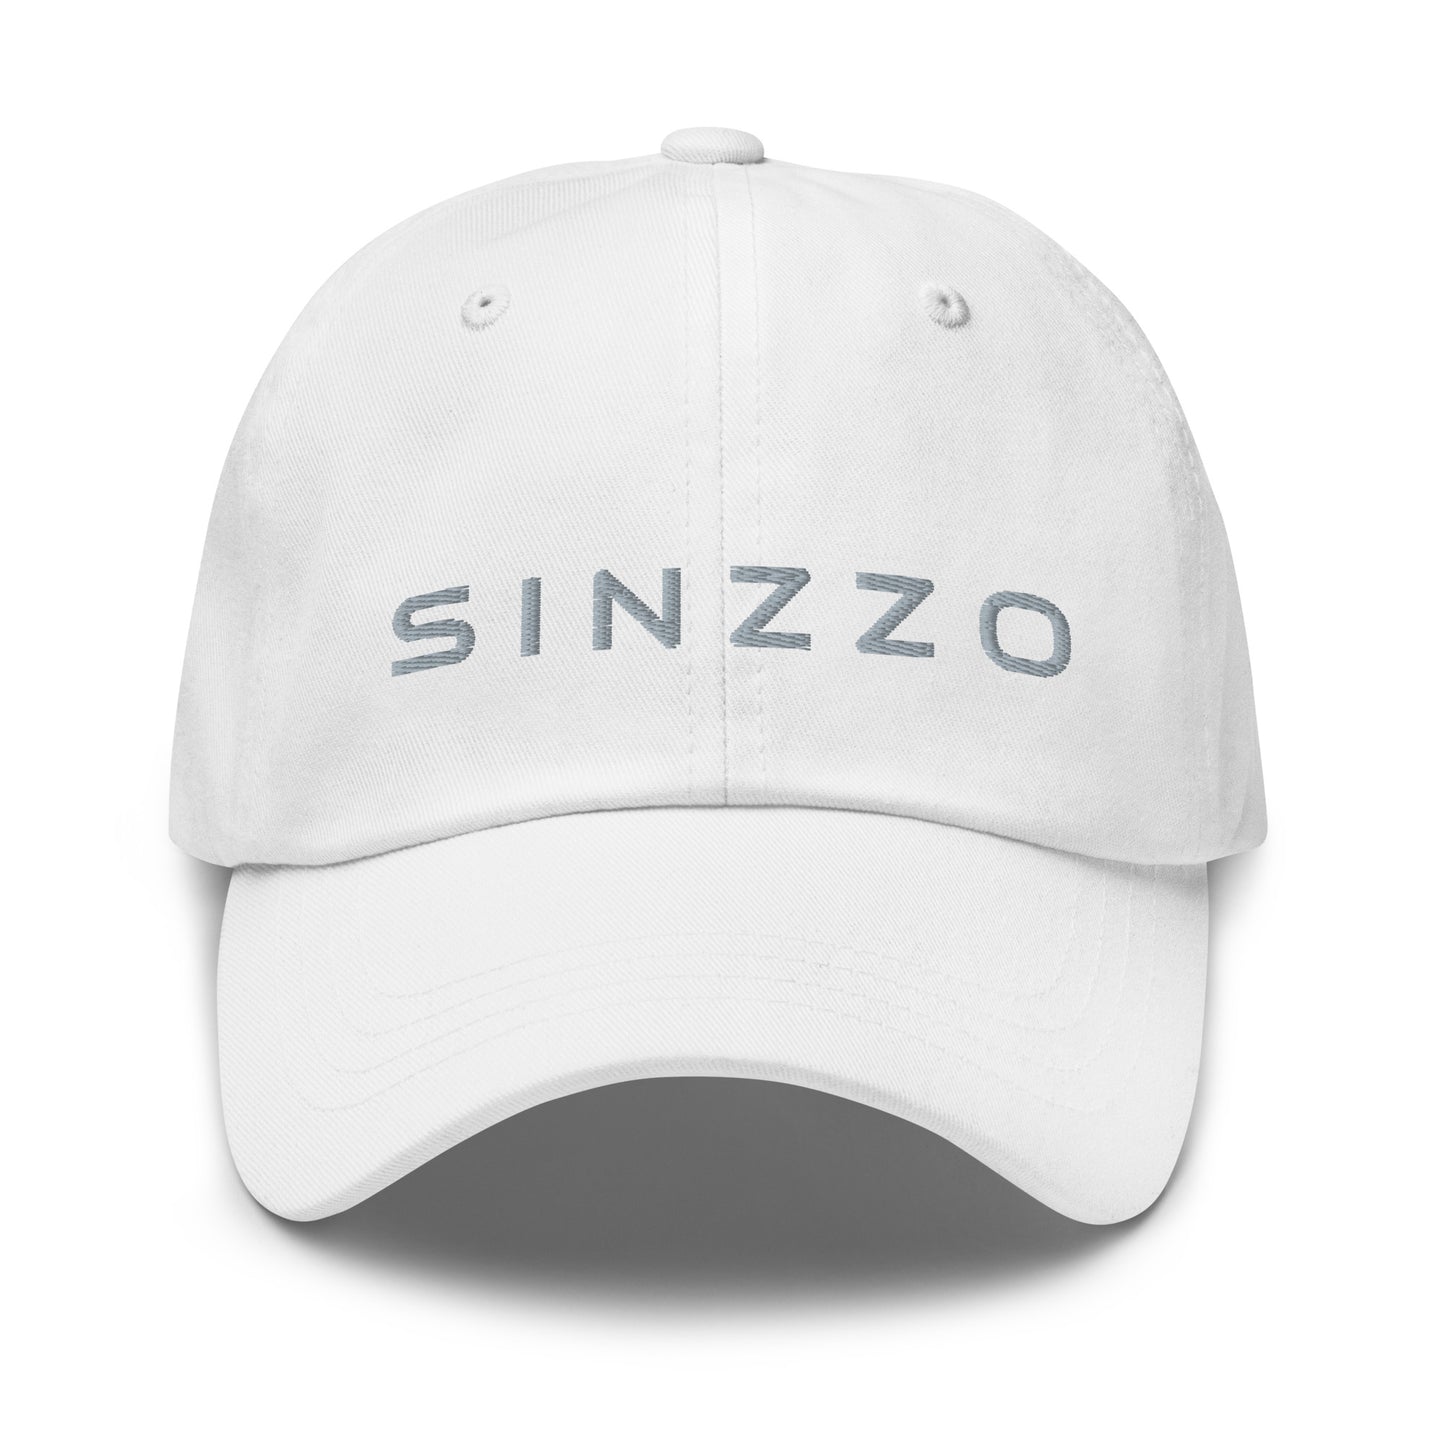 Sport SinzZo-Cap!